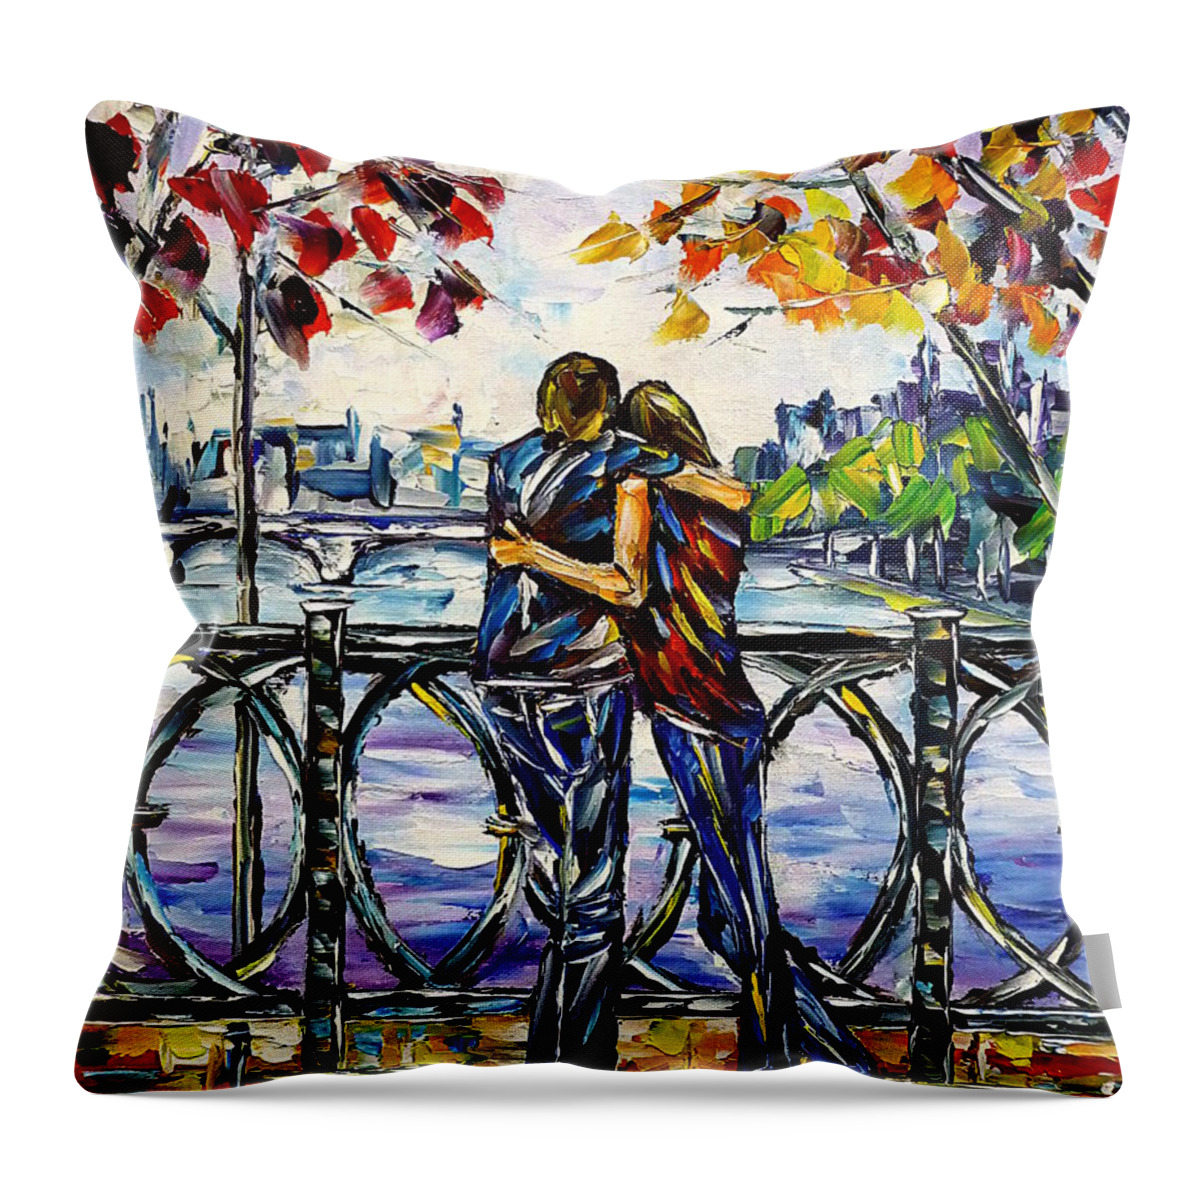 I Love Paris Throw Pillow featuring the painting On The Paris Bridge by Mirek Kuzniar